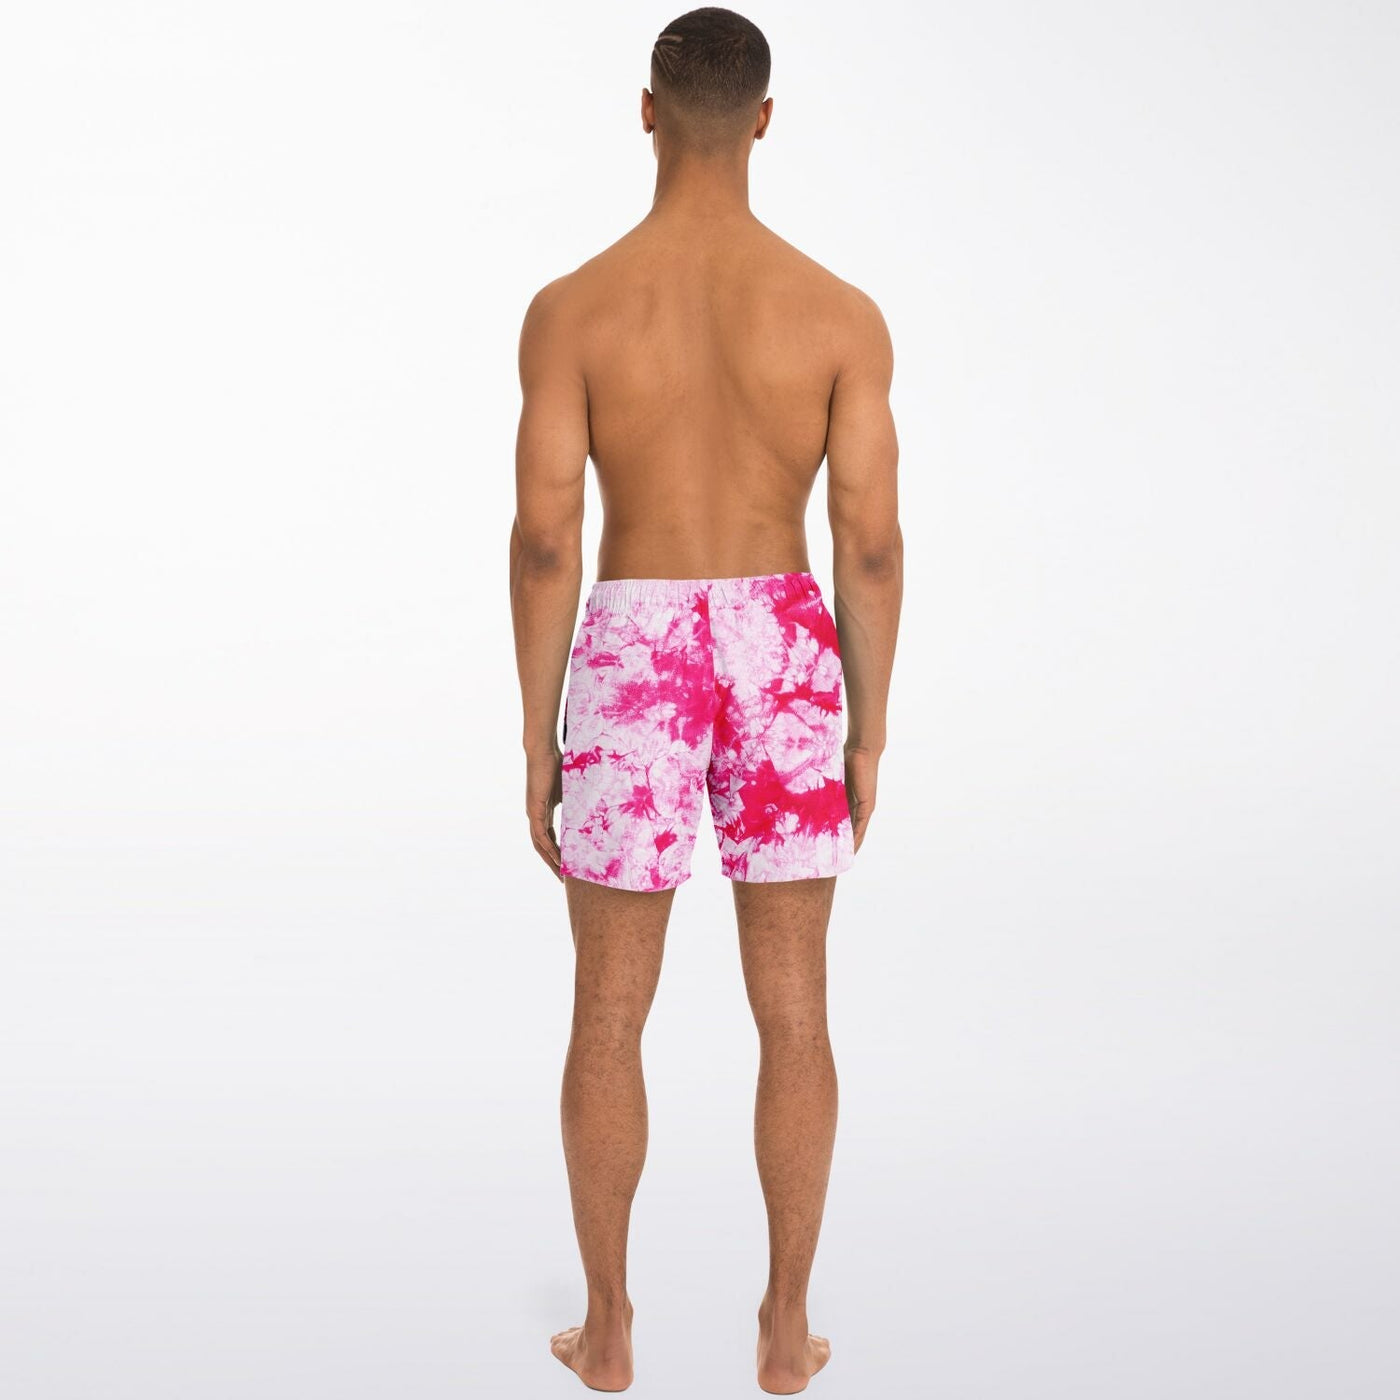 Hot Pink Tie-Dye Swim Shorts